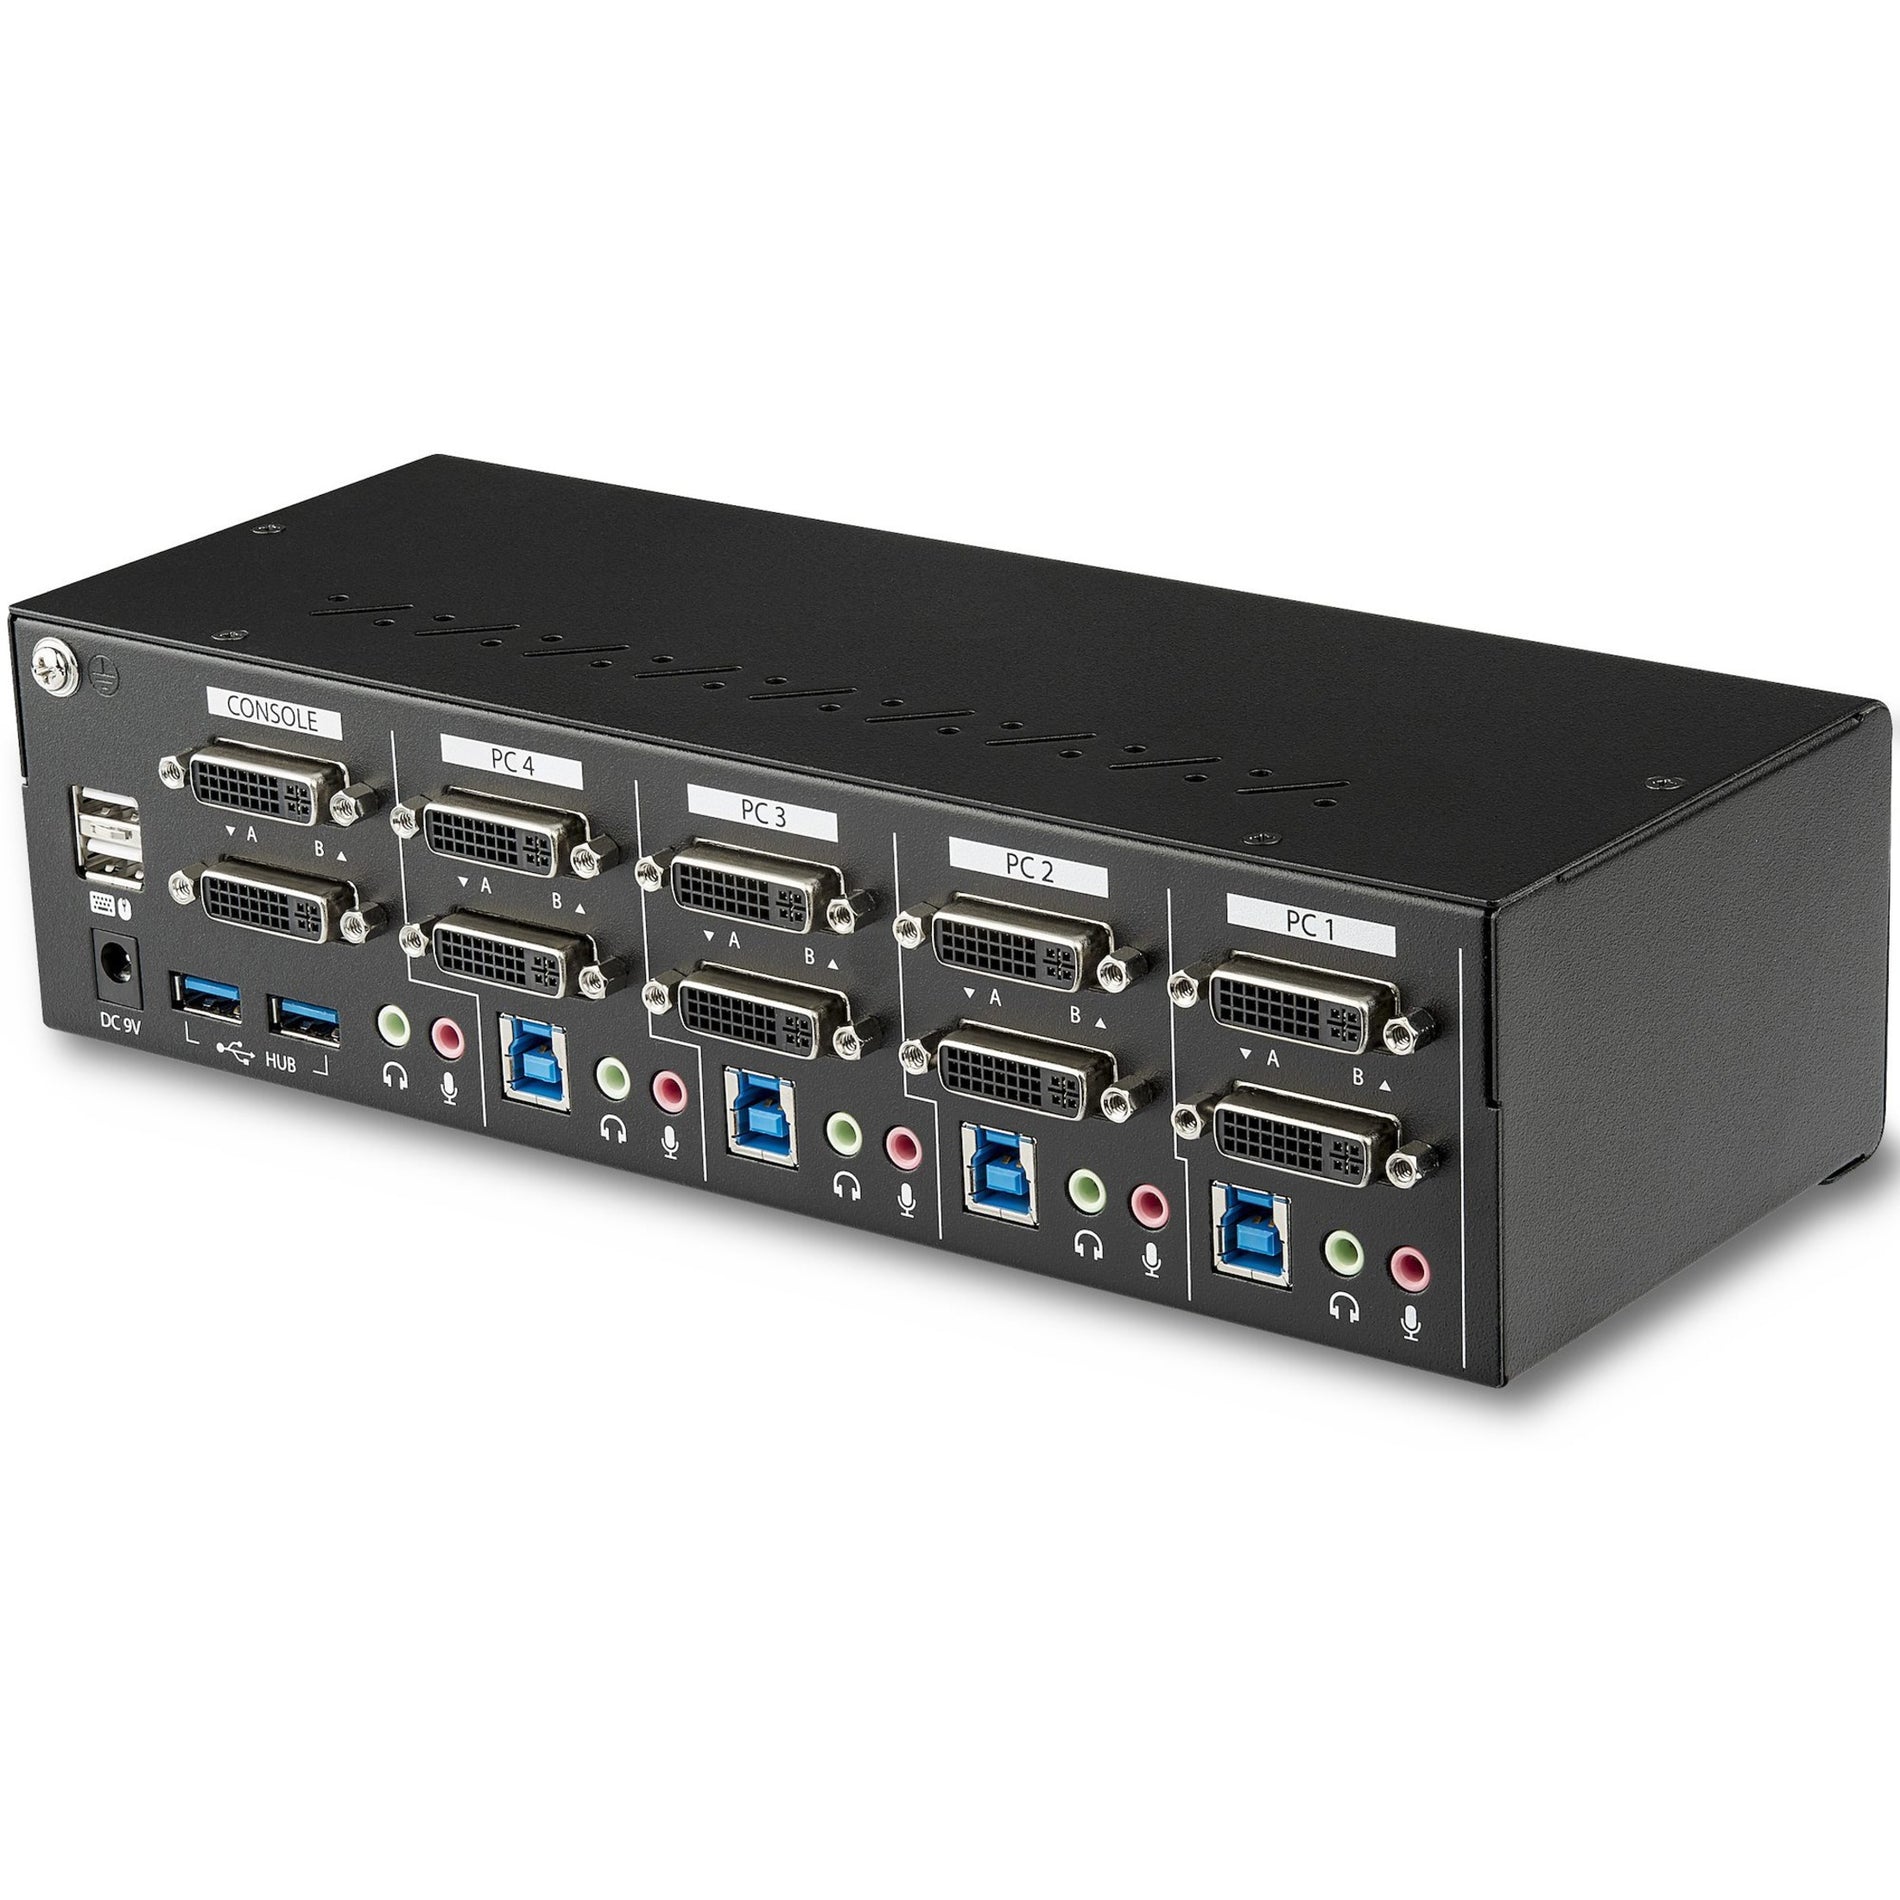 StarTech.com SV431DL2DU3A 4-Port Dual-Monitor Dual-Link DVI USB KVM Switch, TAA Compliant, Integrated 2-port USB 3.0 Hub, 3.5mm Audio, Up to 5Gbps Speeds